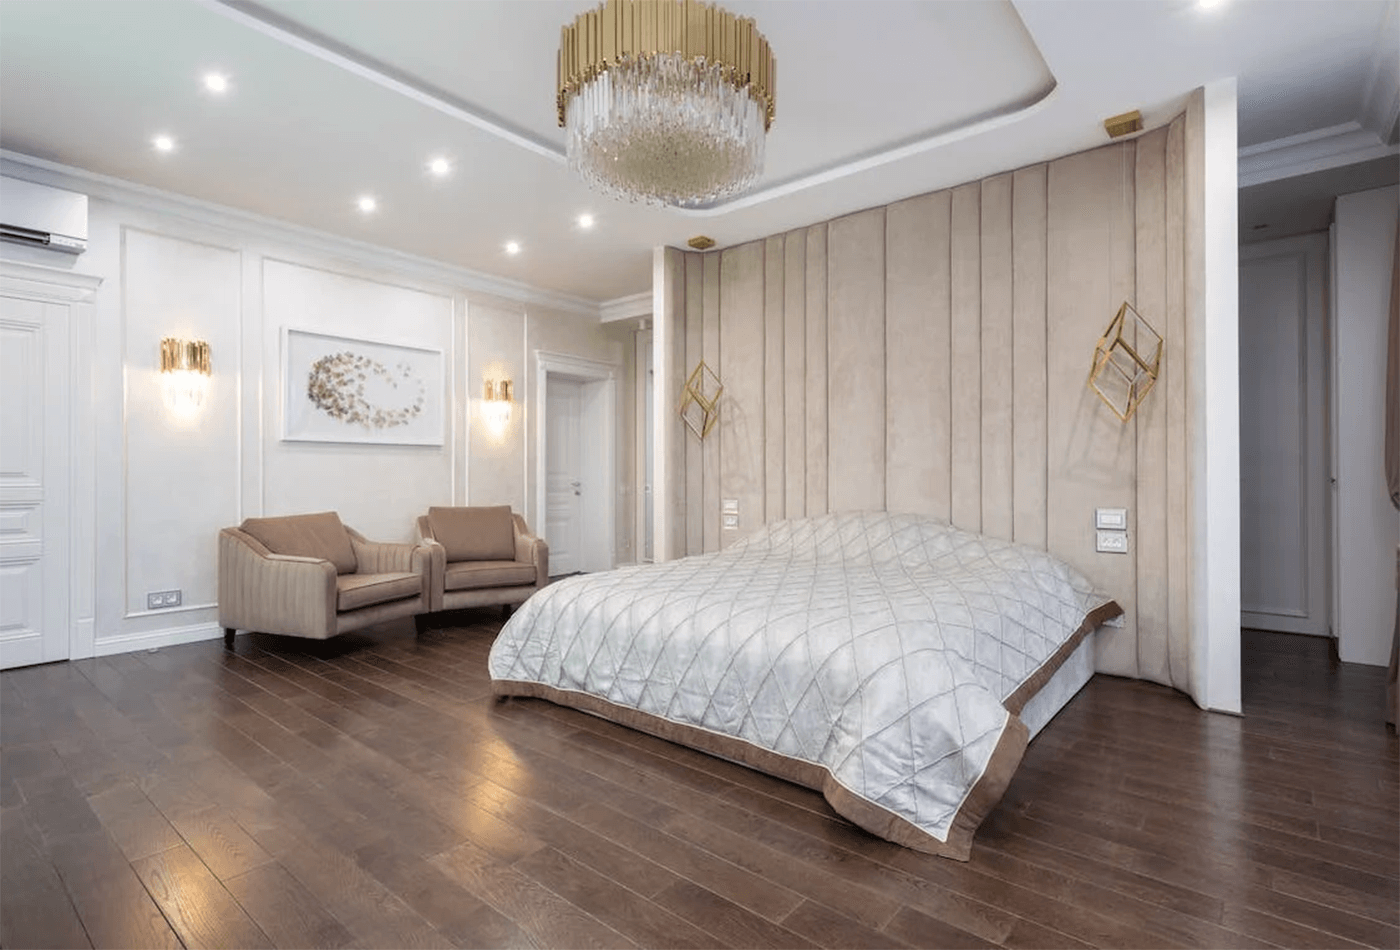 Modern Master Bedroom Ideas, Sounds So Fascinating